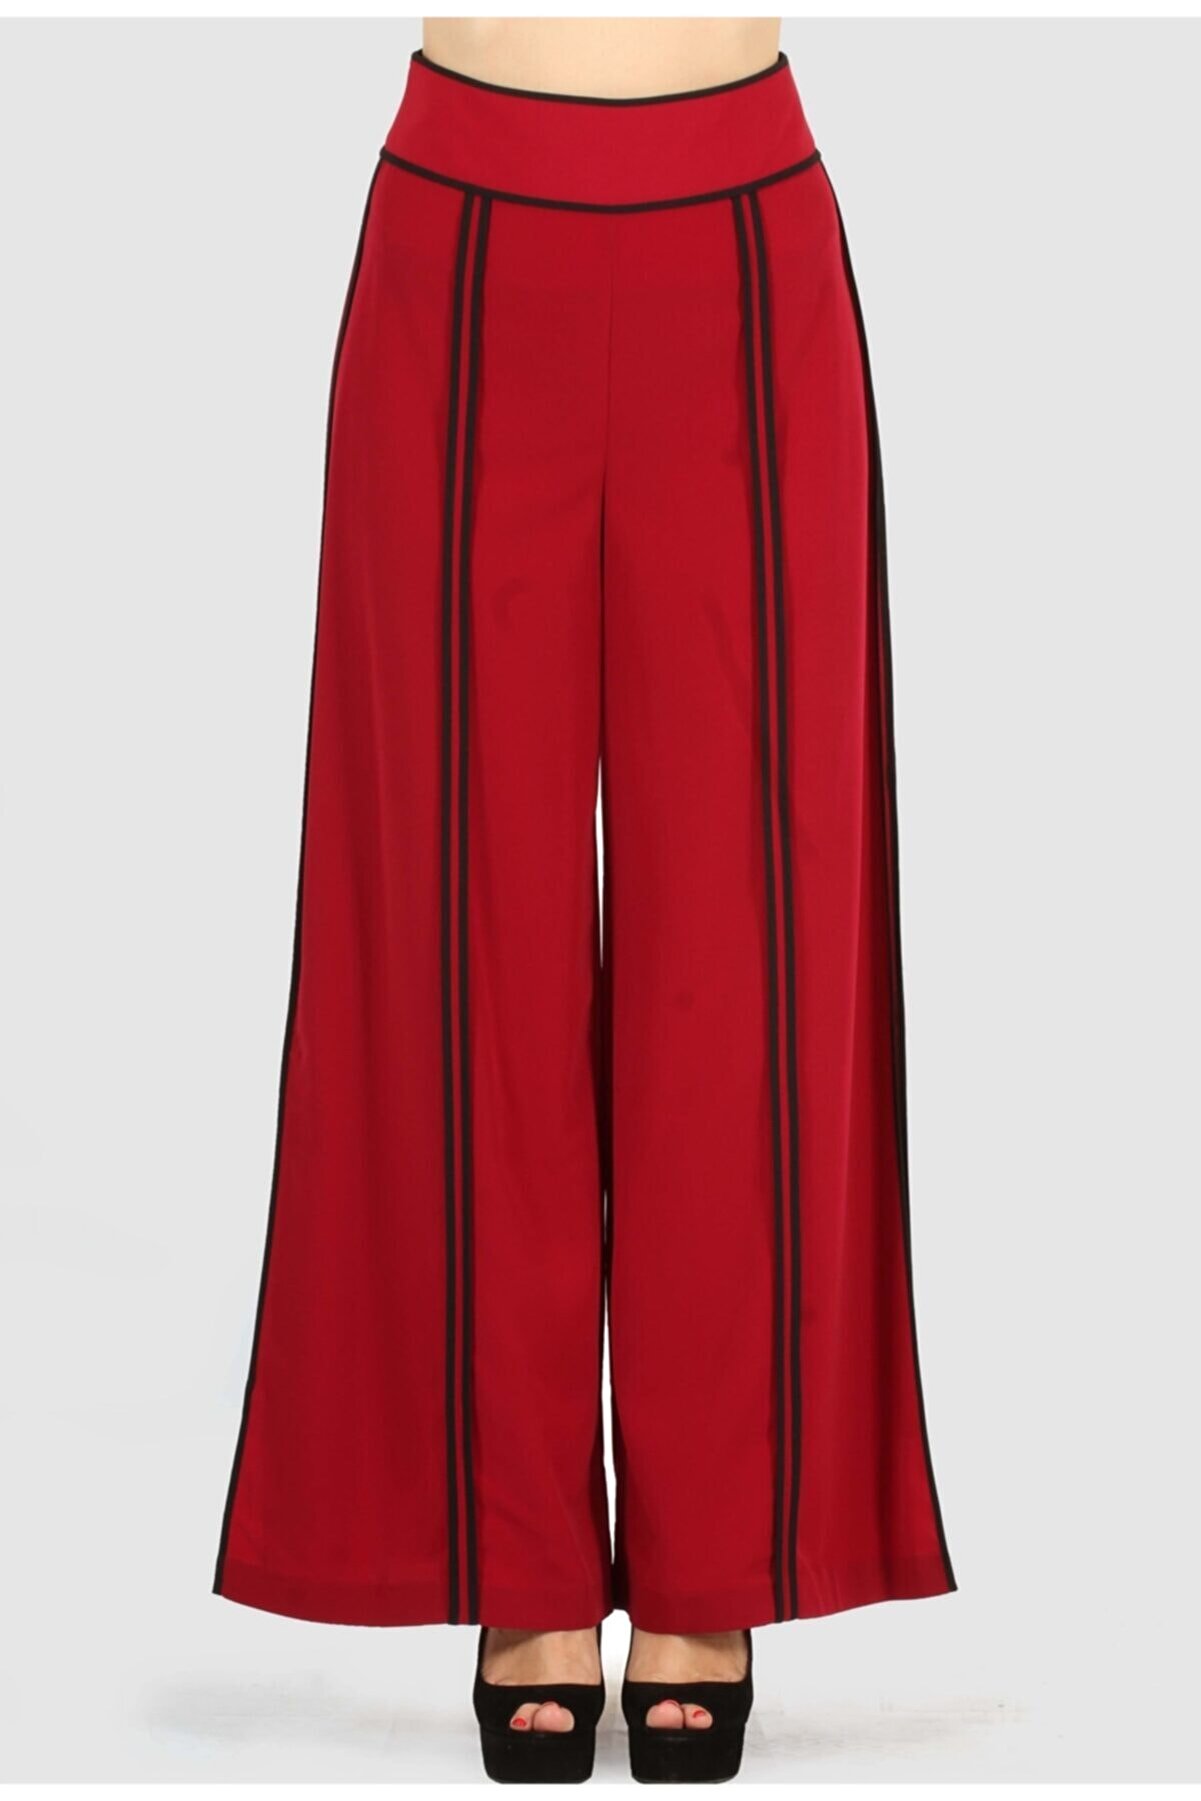 rapellin Bol Paça Tasarım Pantolon 1610-kırmızı